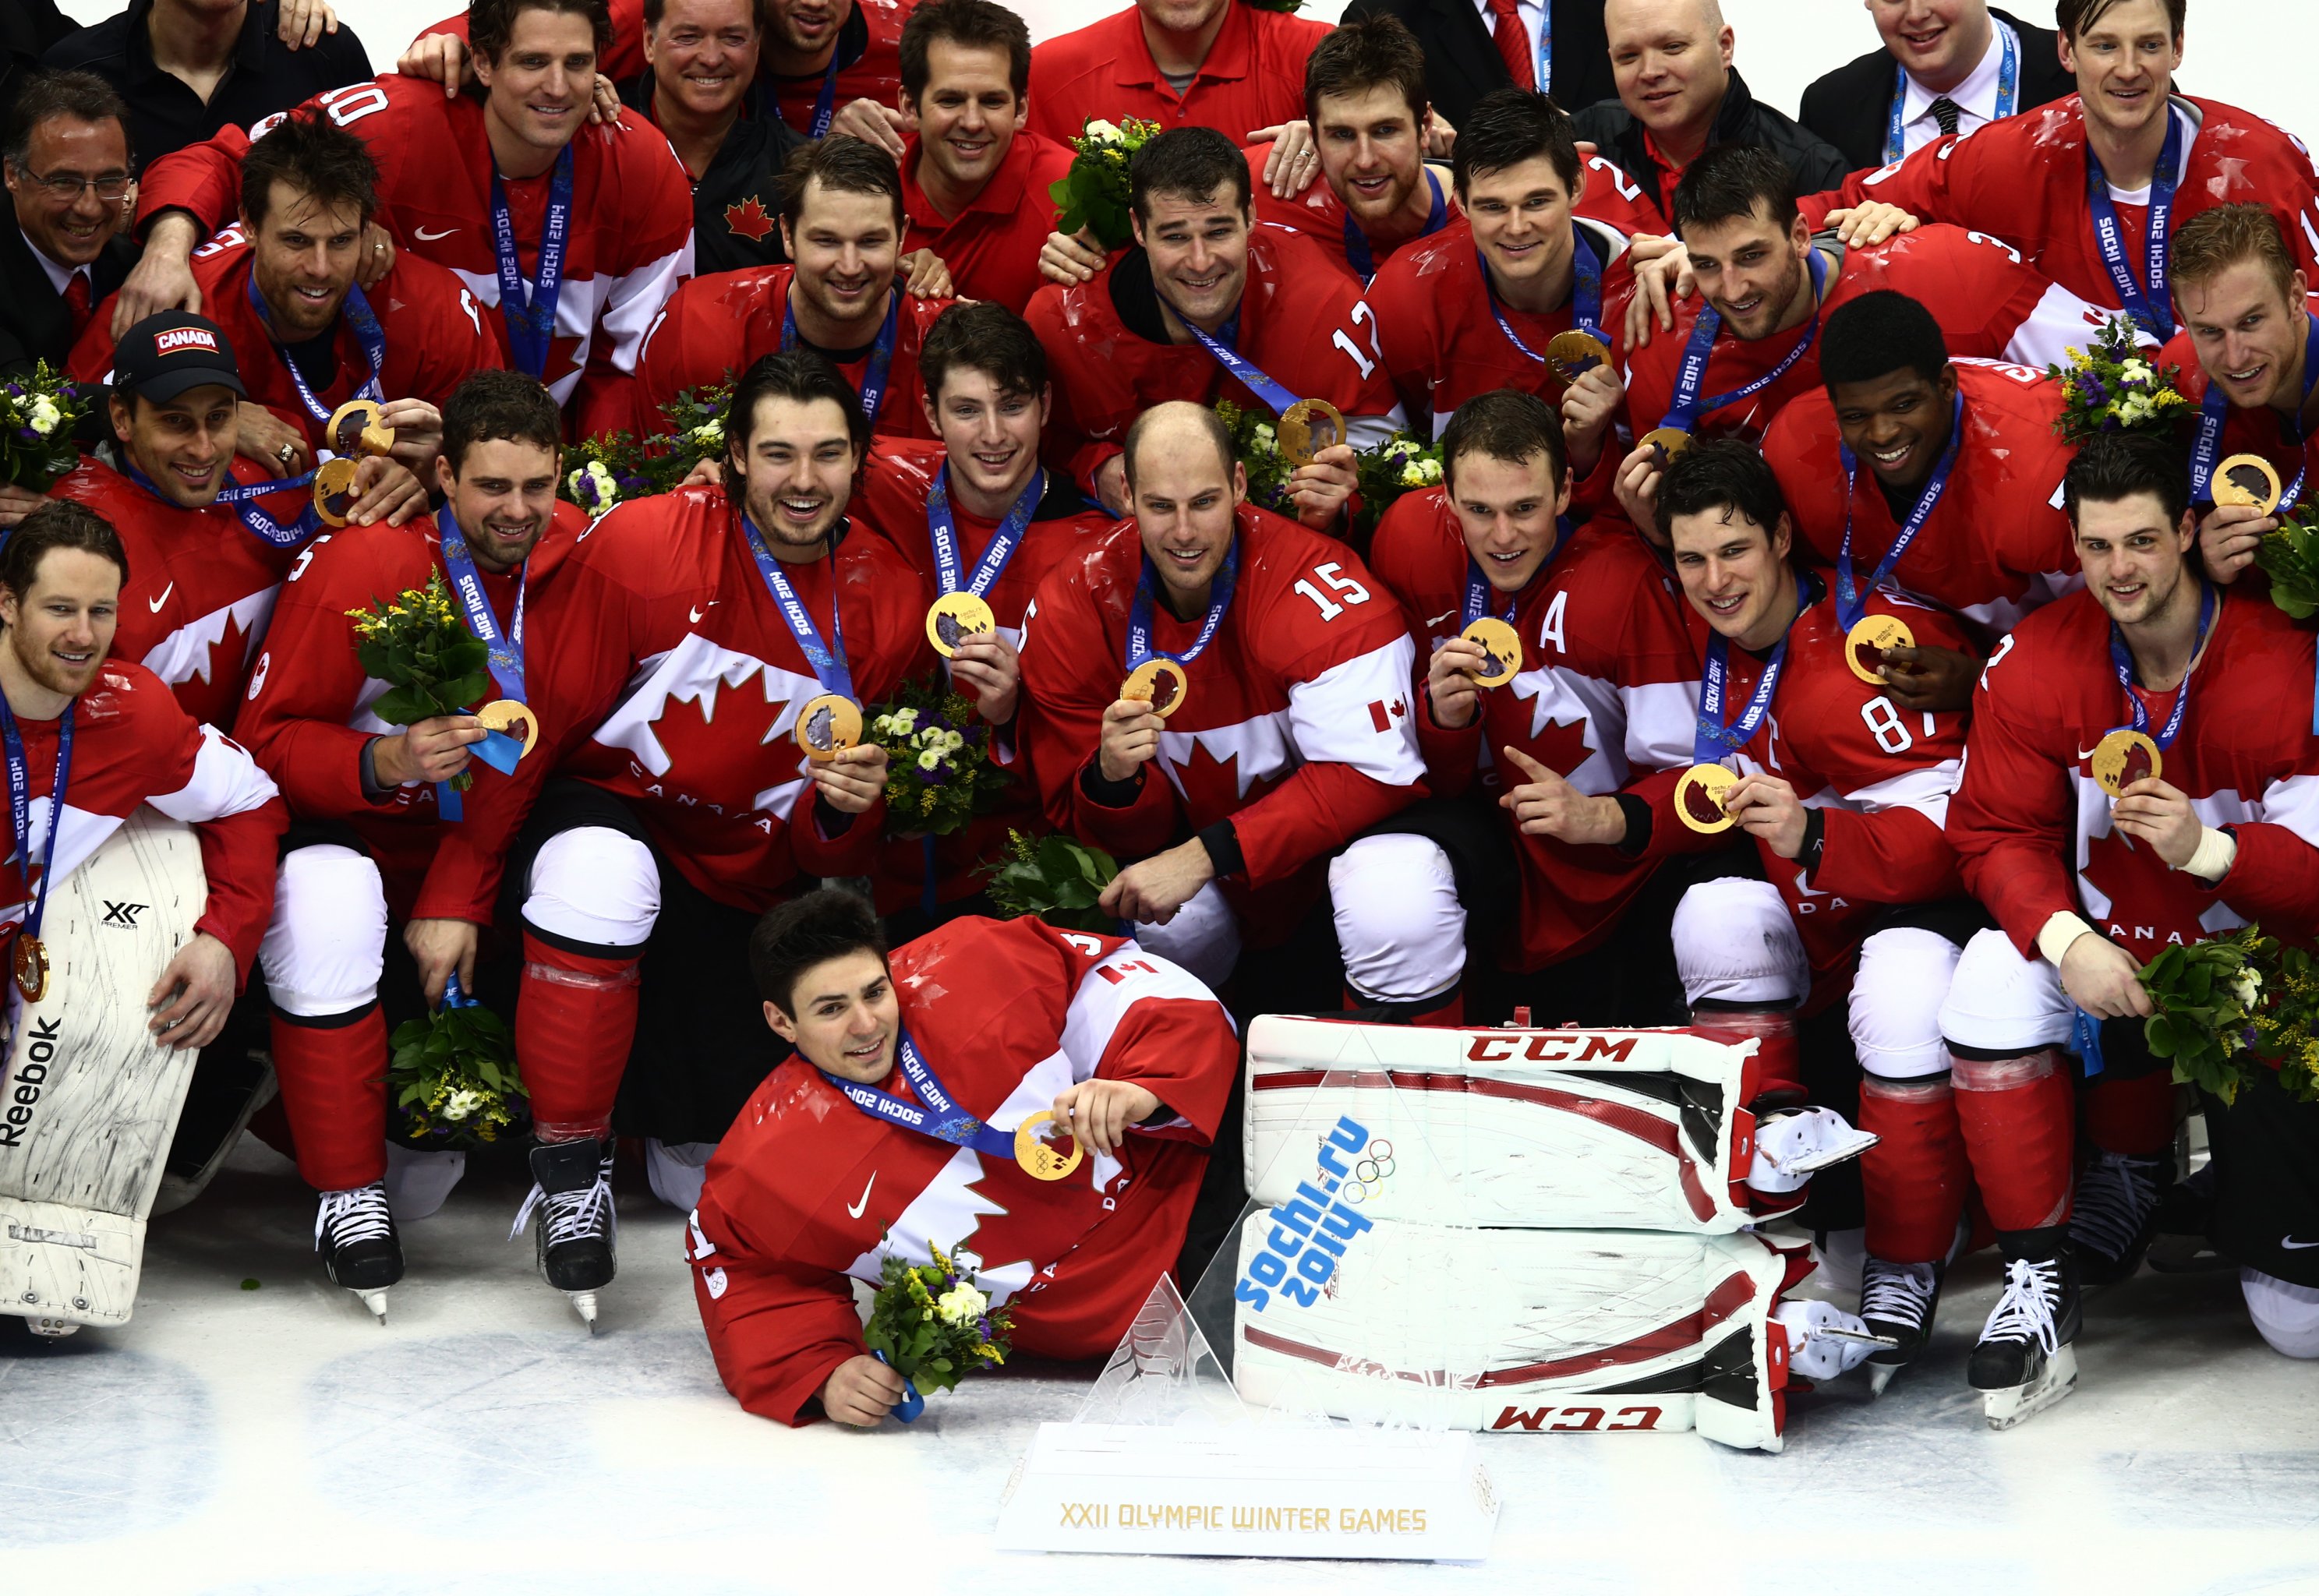 Canada Crosby Hockey Jersey so Cool Canada Olympic Hockey 